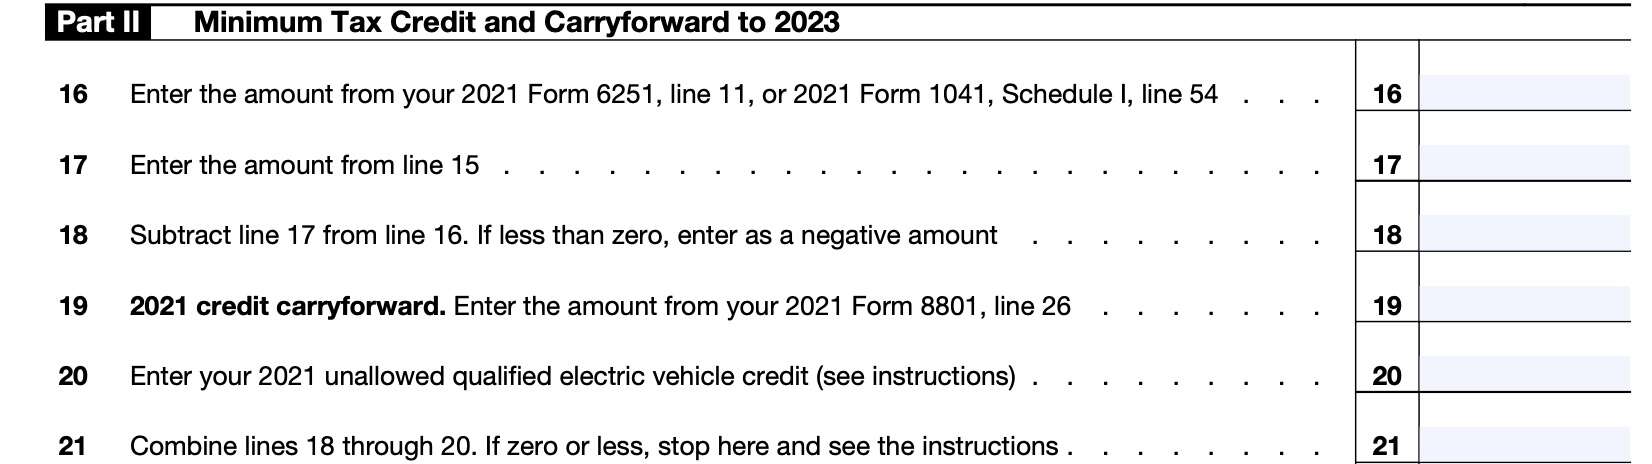 Part II: Minimum tax credit and carryforward to next tax year, lines 16-21